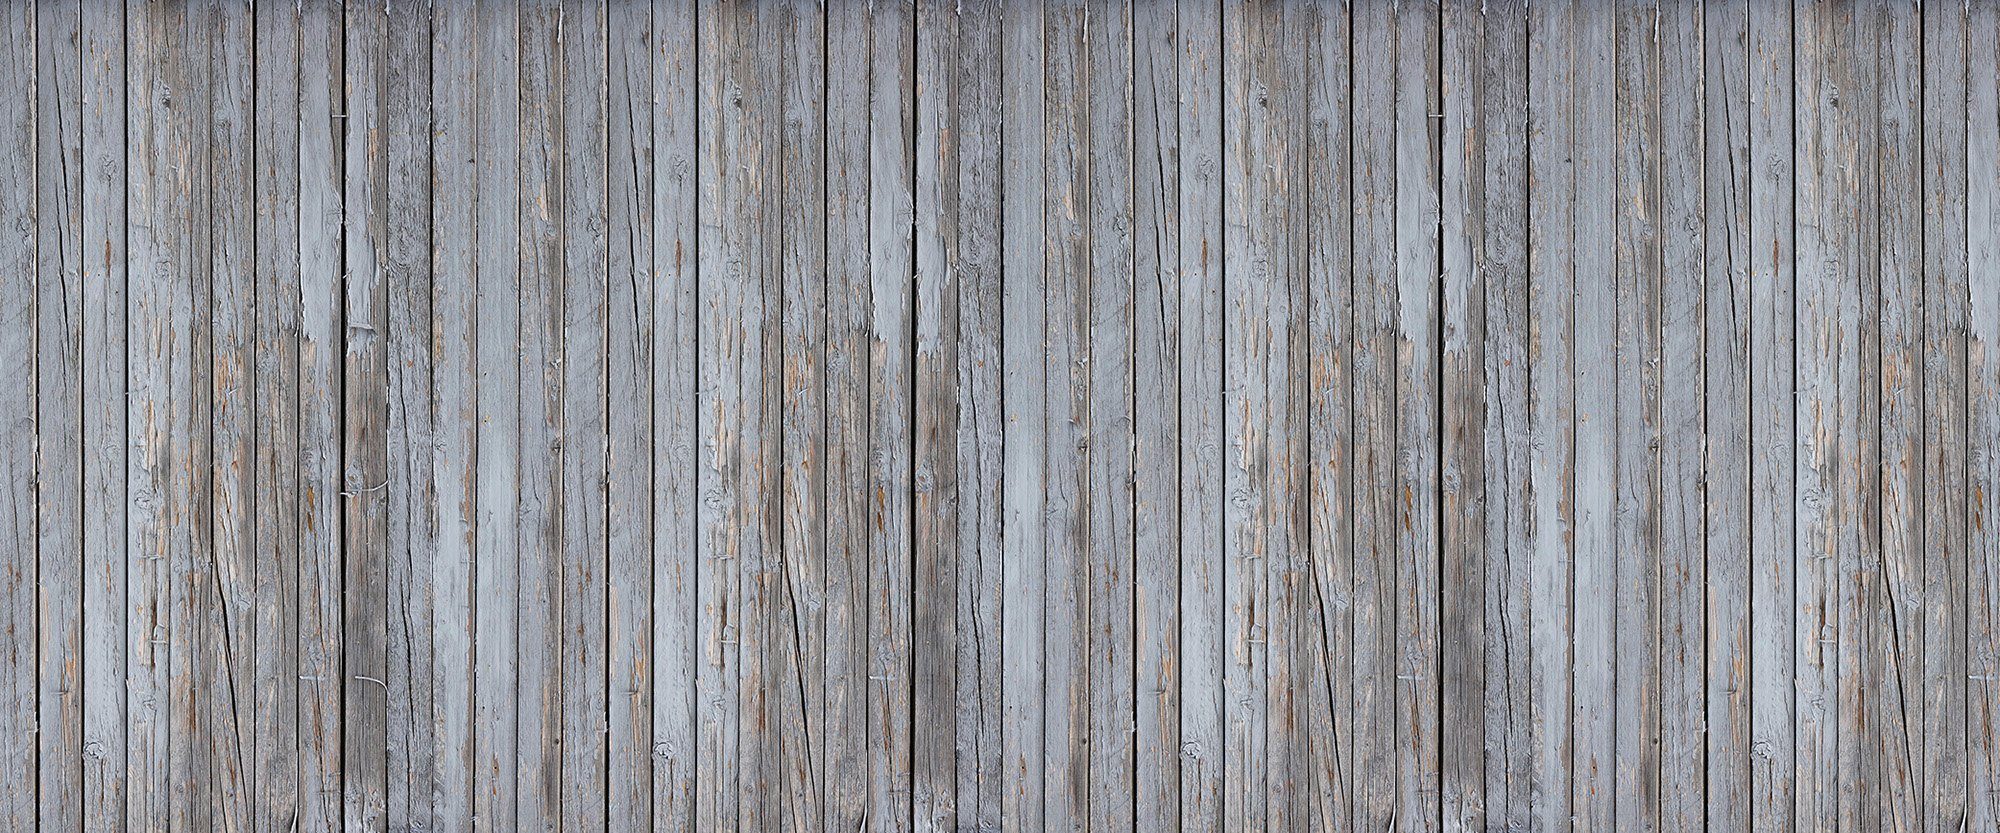 Architects Paper Fototapete Old Wooden Wall, (Set, 6 St), Vlies, Wand, Schräge